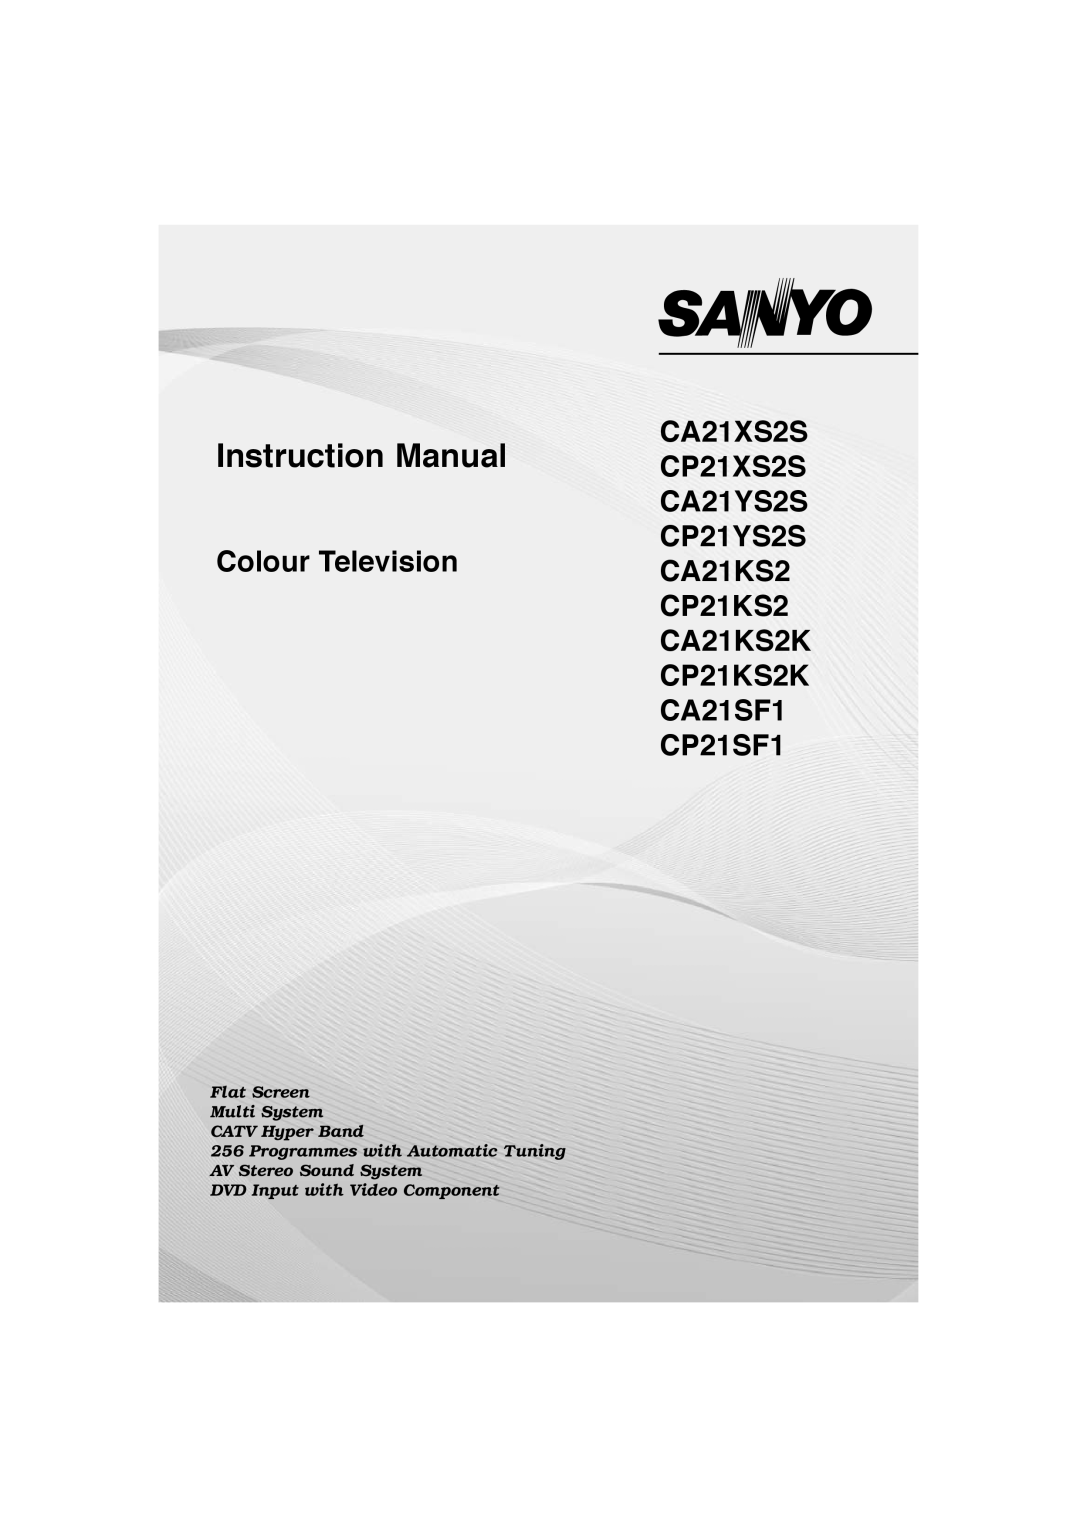 Sanyo CP21XS2S instruction manual Instruction Manual, CA21XS2S, CA21YS2S, Colour Television, CP21YS2S, CA21KS2, CP21KS2 